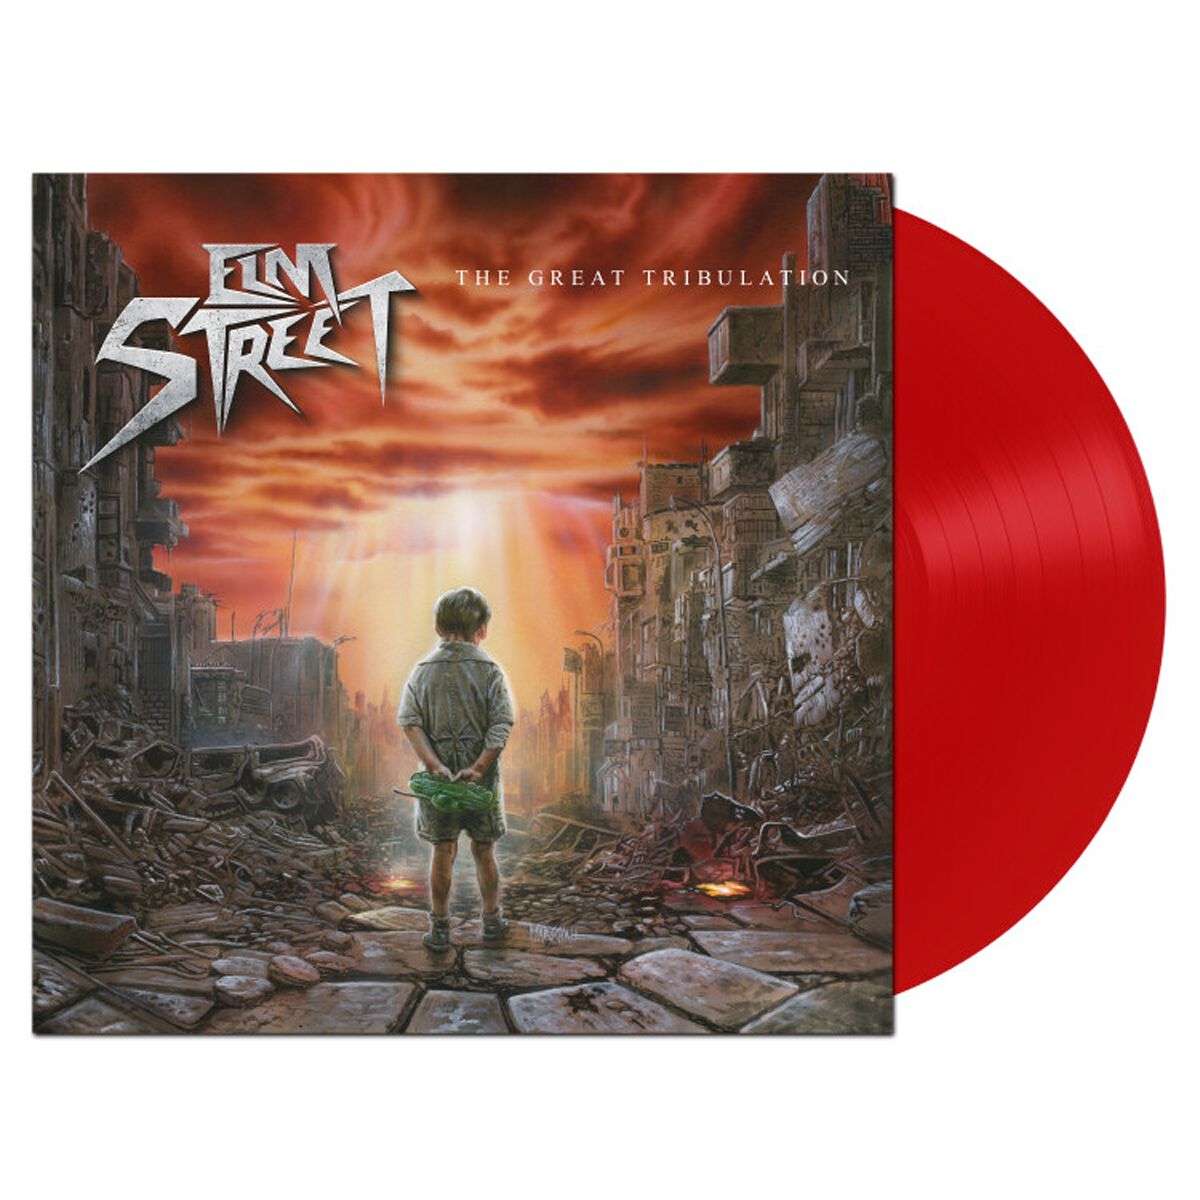 The great tribulation von Elm Street - LP (Coloured, Limited Edition, Standard)